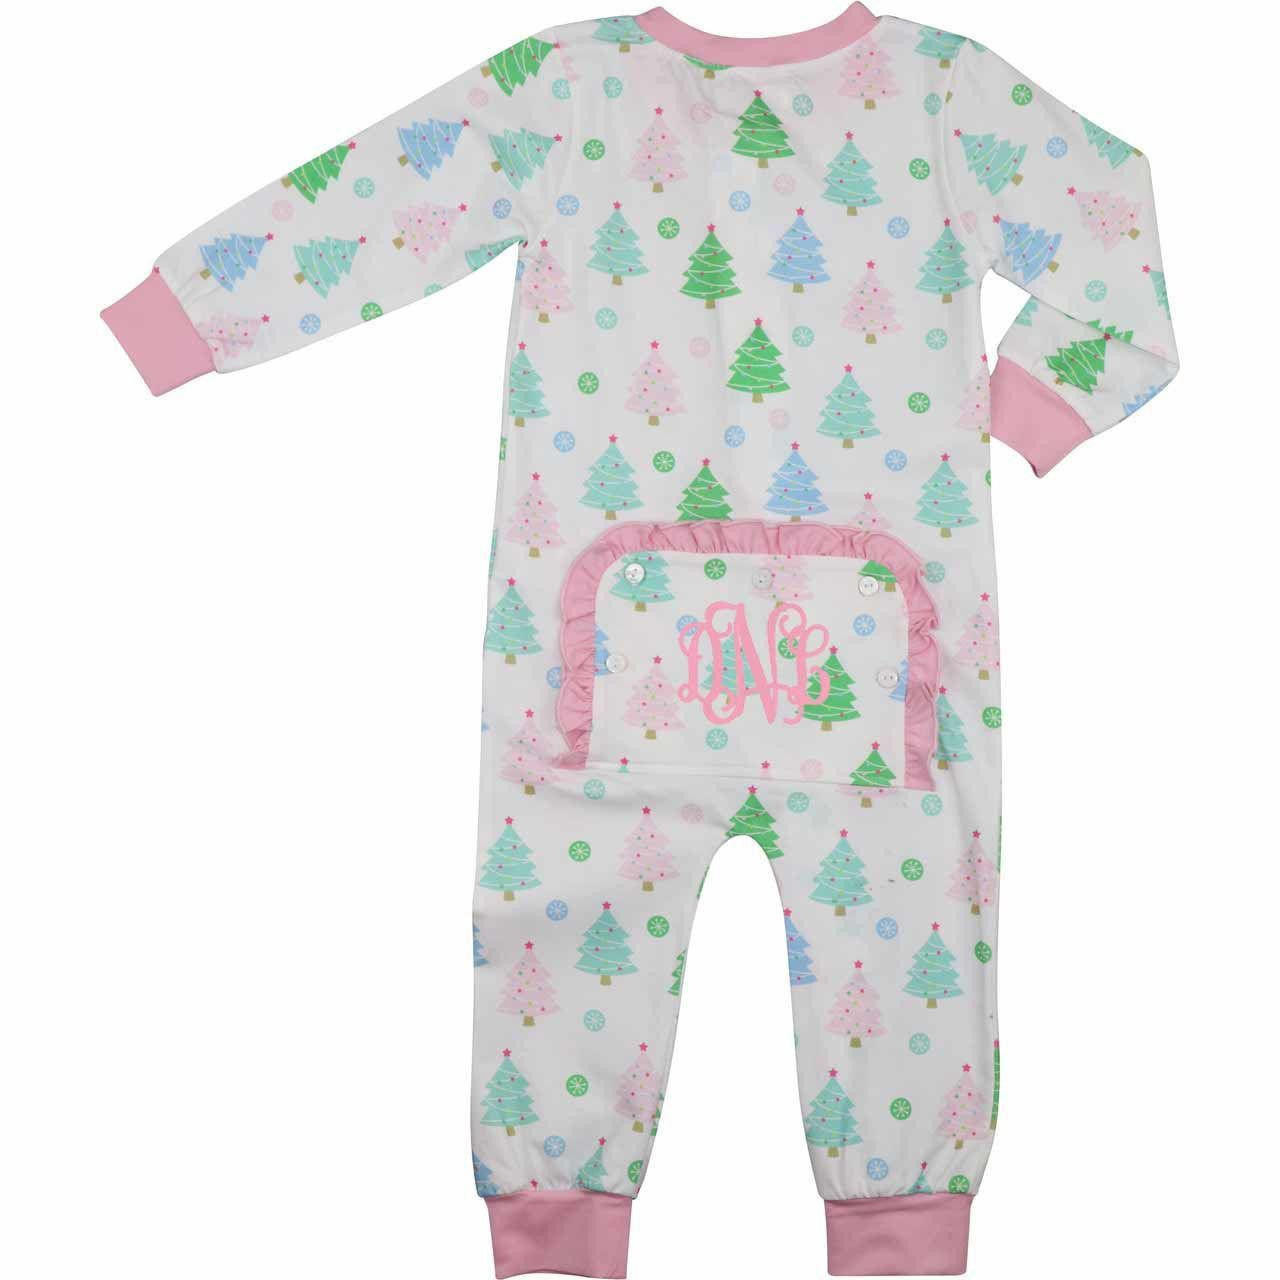 Pastel Knit Christmas Tree Zipper Pajamas - Shipping Mid October